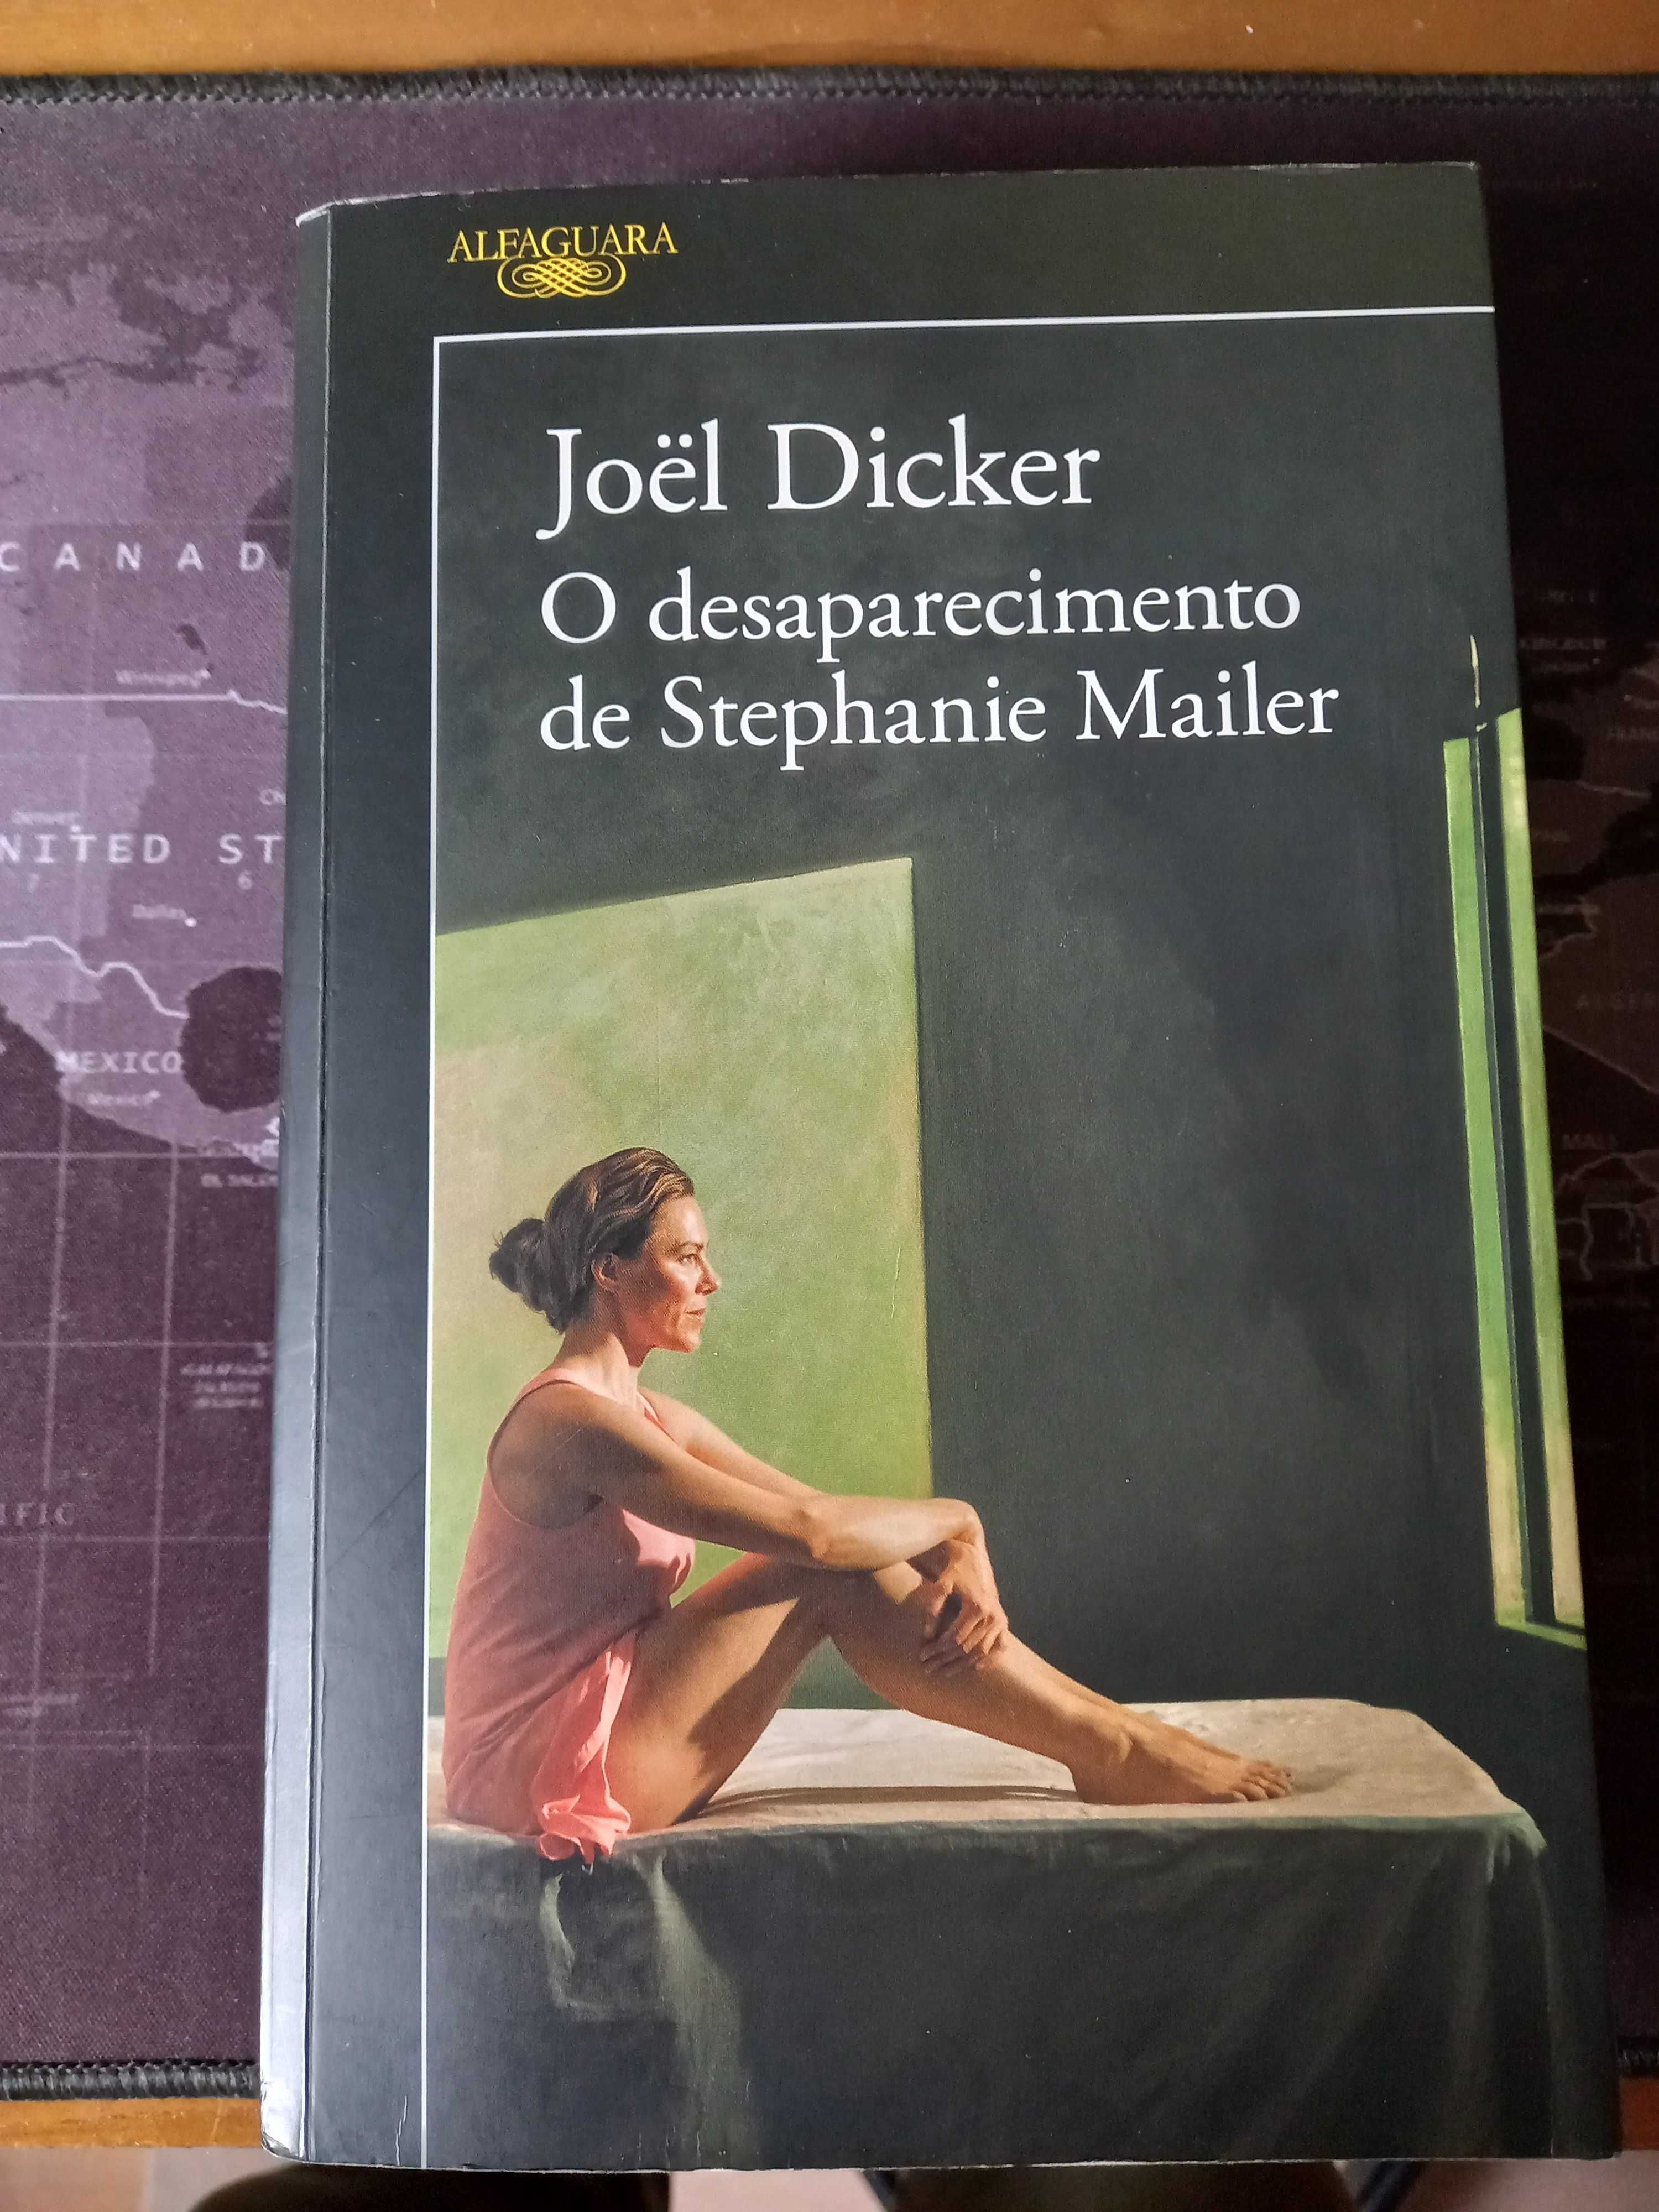 Joel Dicker - Vários